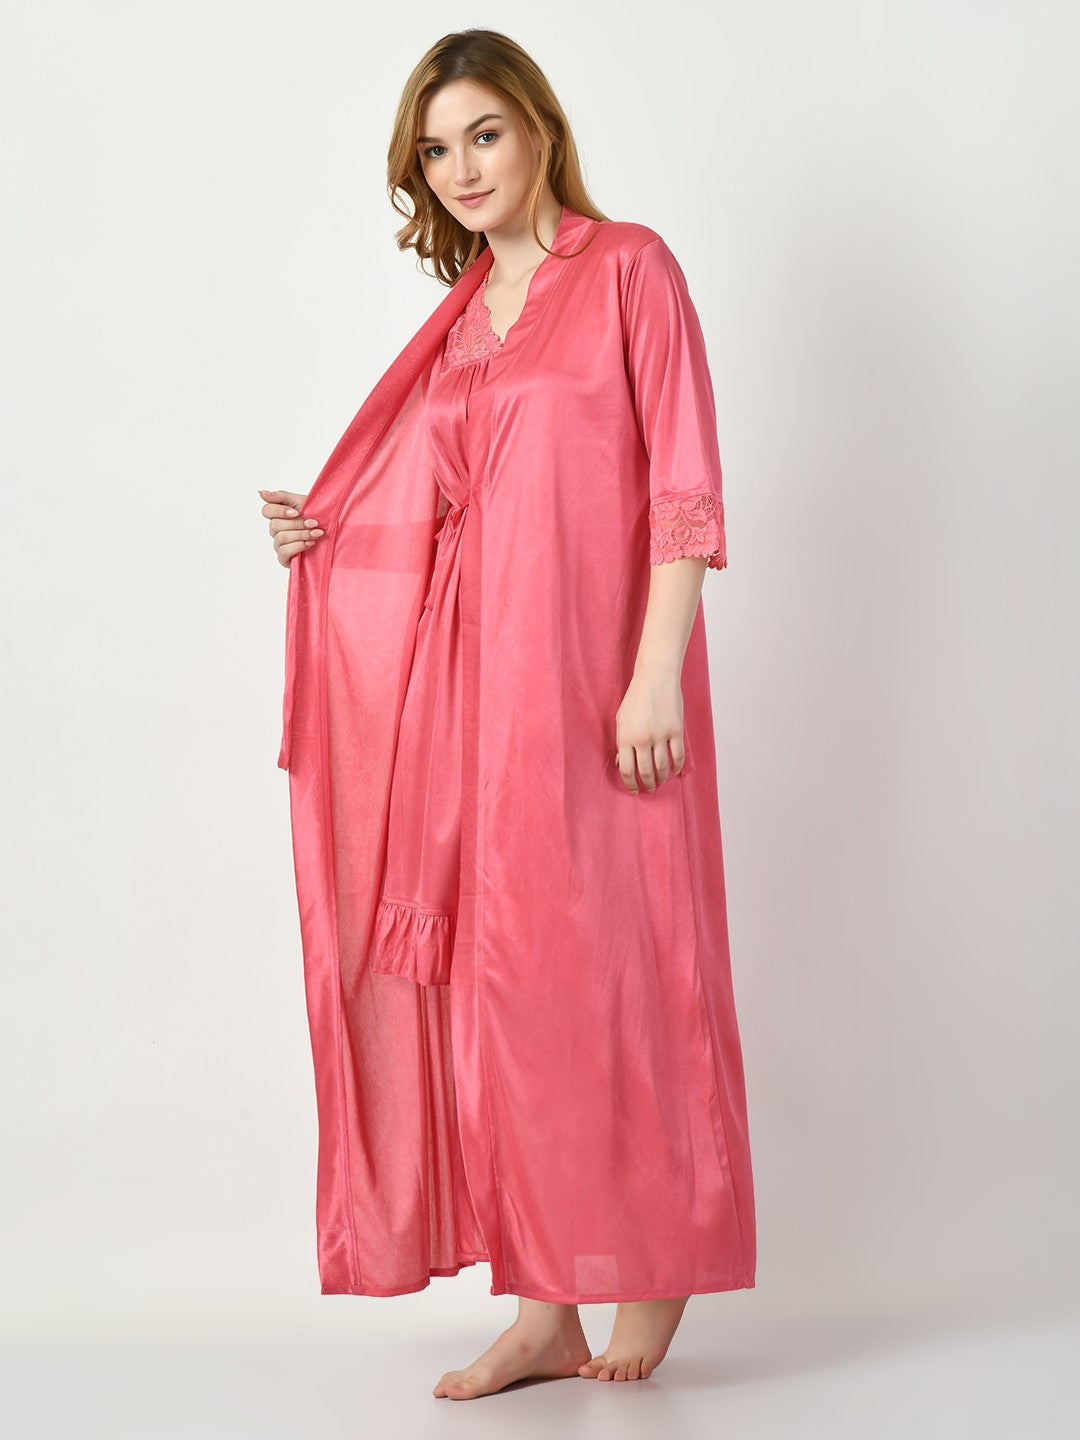 Women's Satin Pink Nightdress - Legit Affair